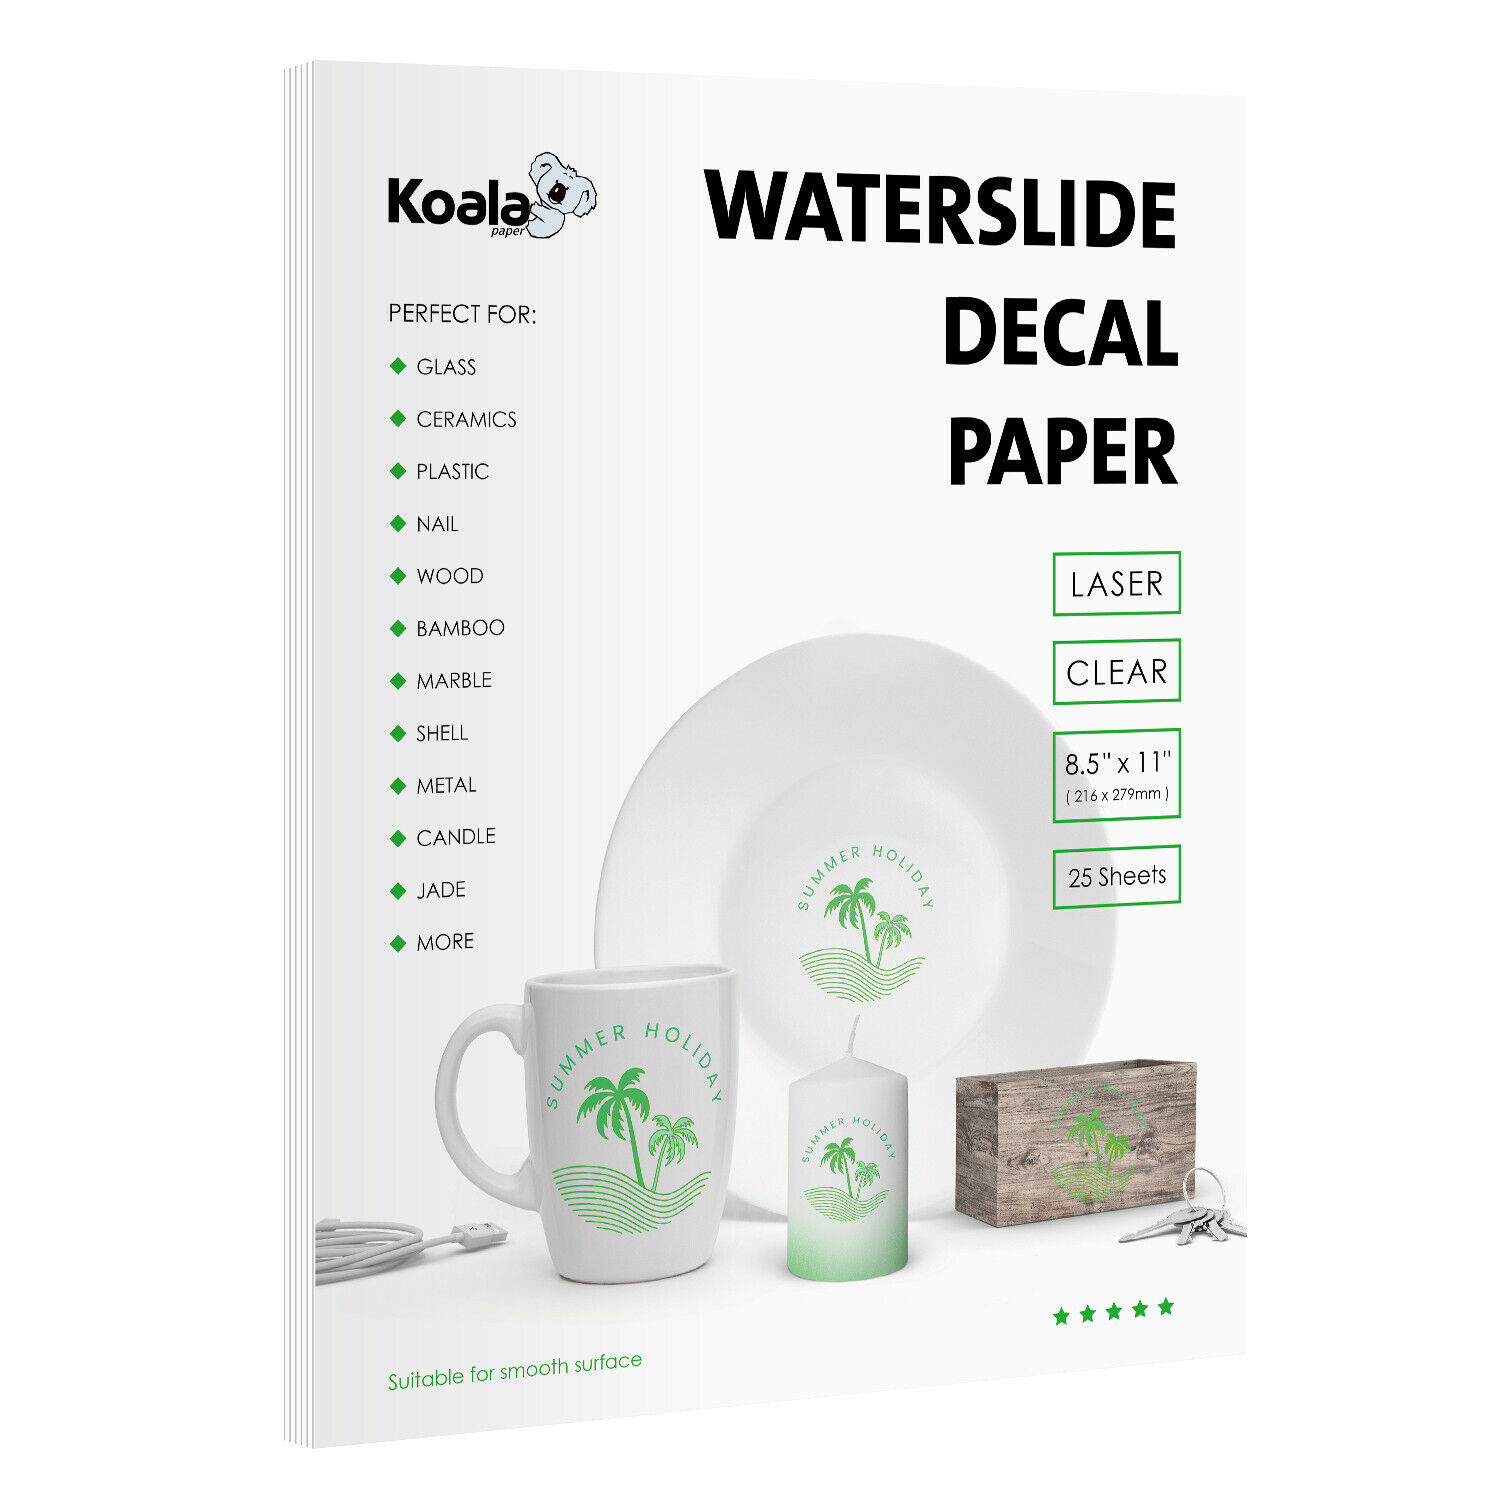 Koala Premium Waterslide Decal Transfer Paper LASER CLEAR 25 Sheets 8.5x11 USA 